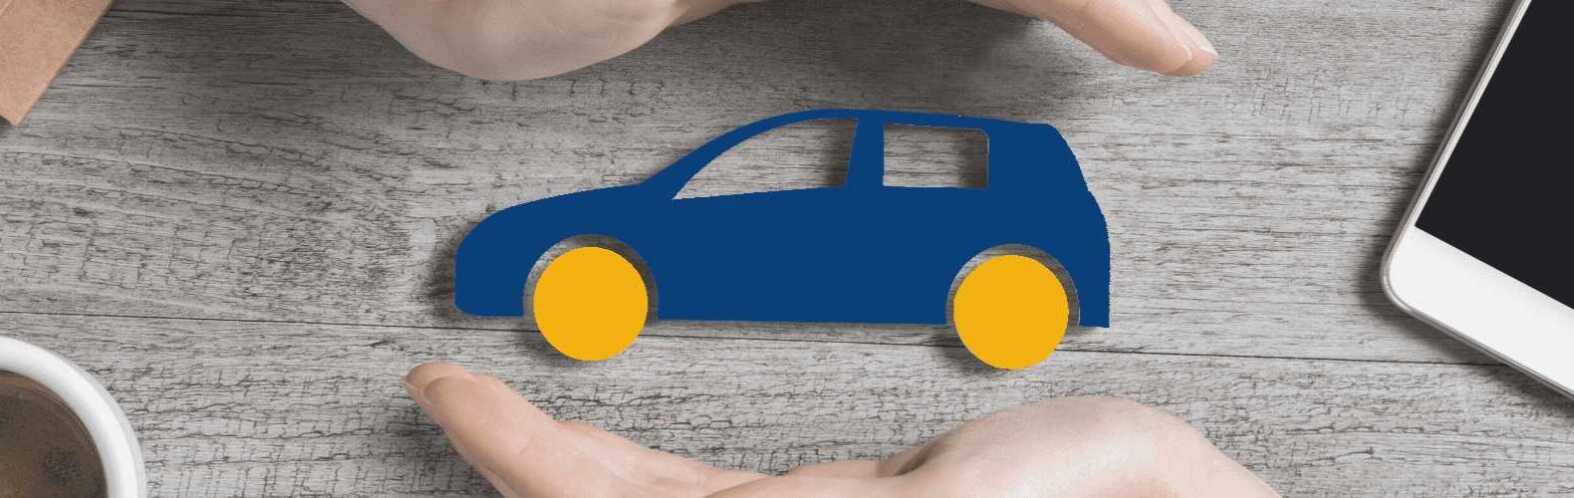 blue vehicle auto insurance 1580x154